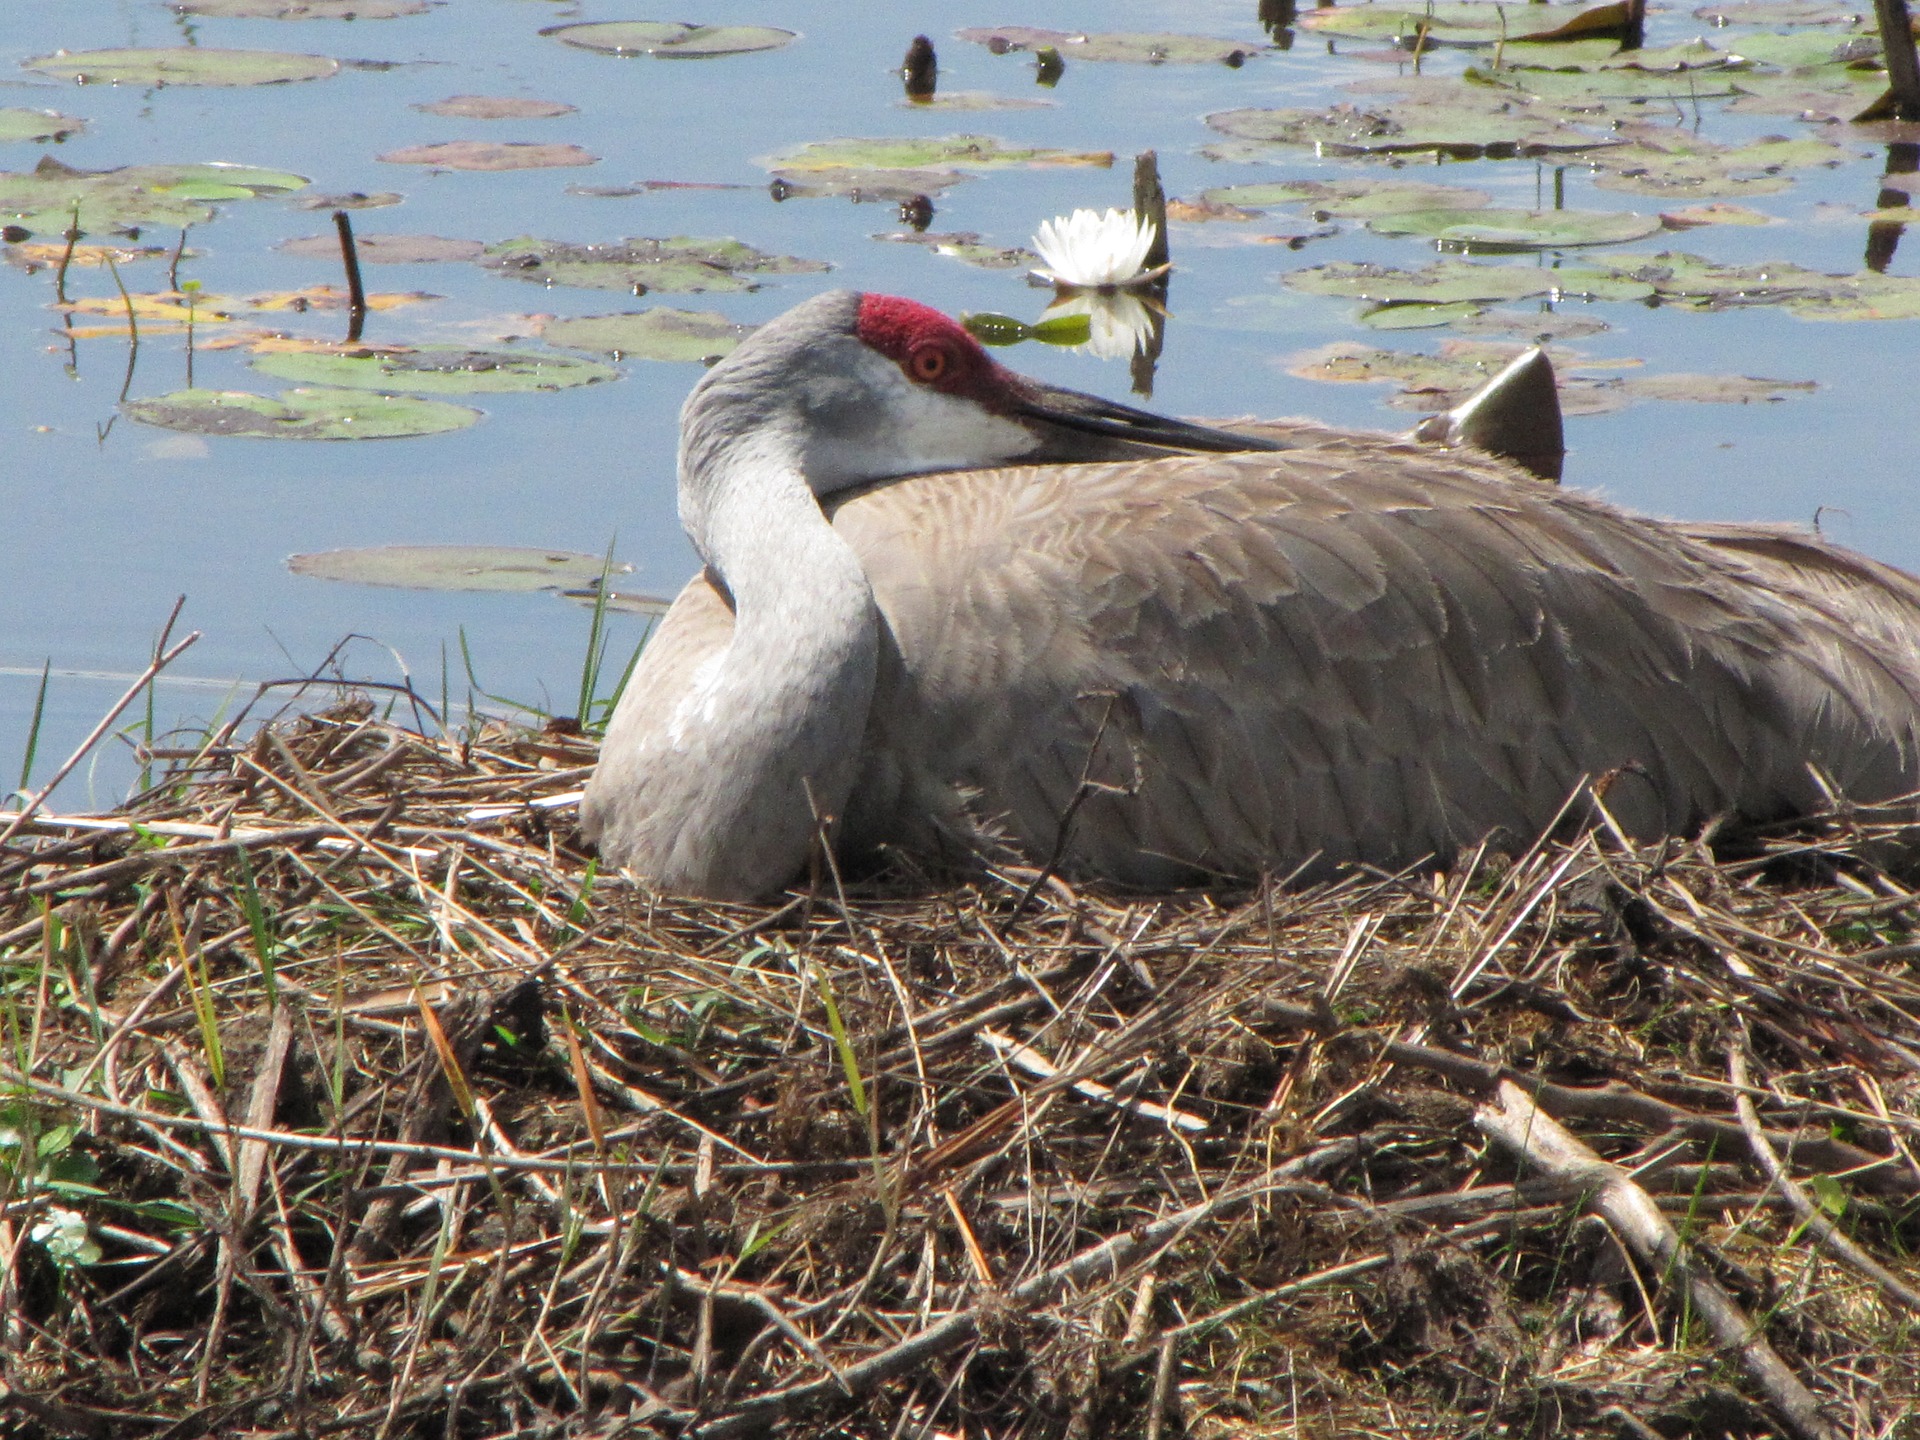 Sandhill crane on nest